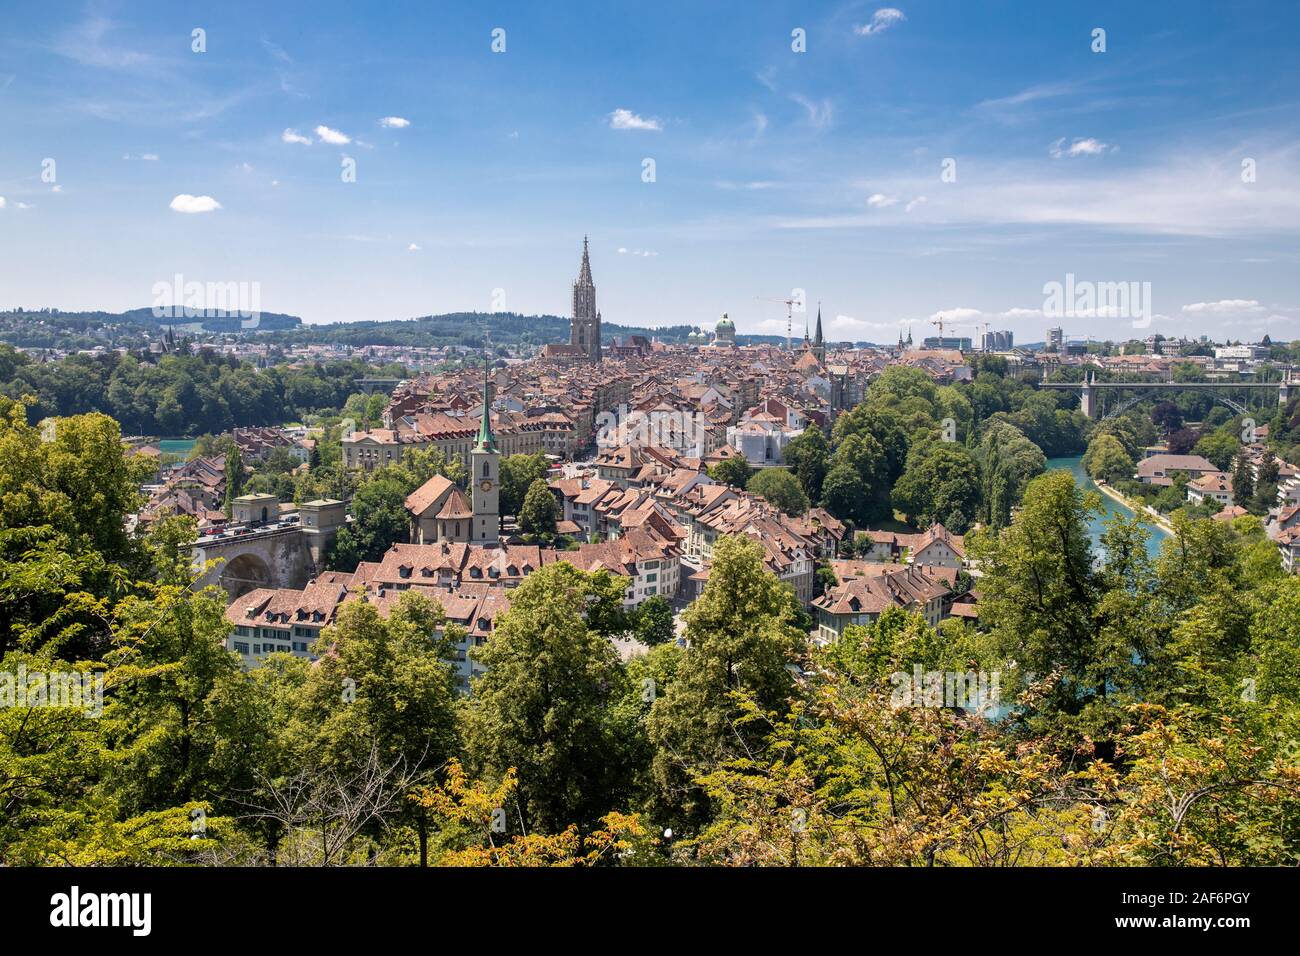 Panorama view of Bern old town between maple trees, Switzerland Stock Photo